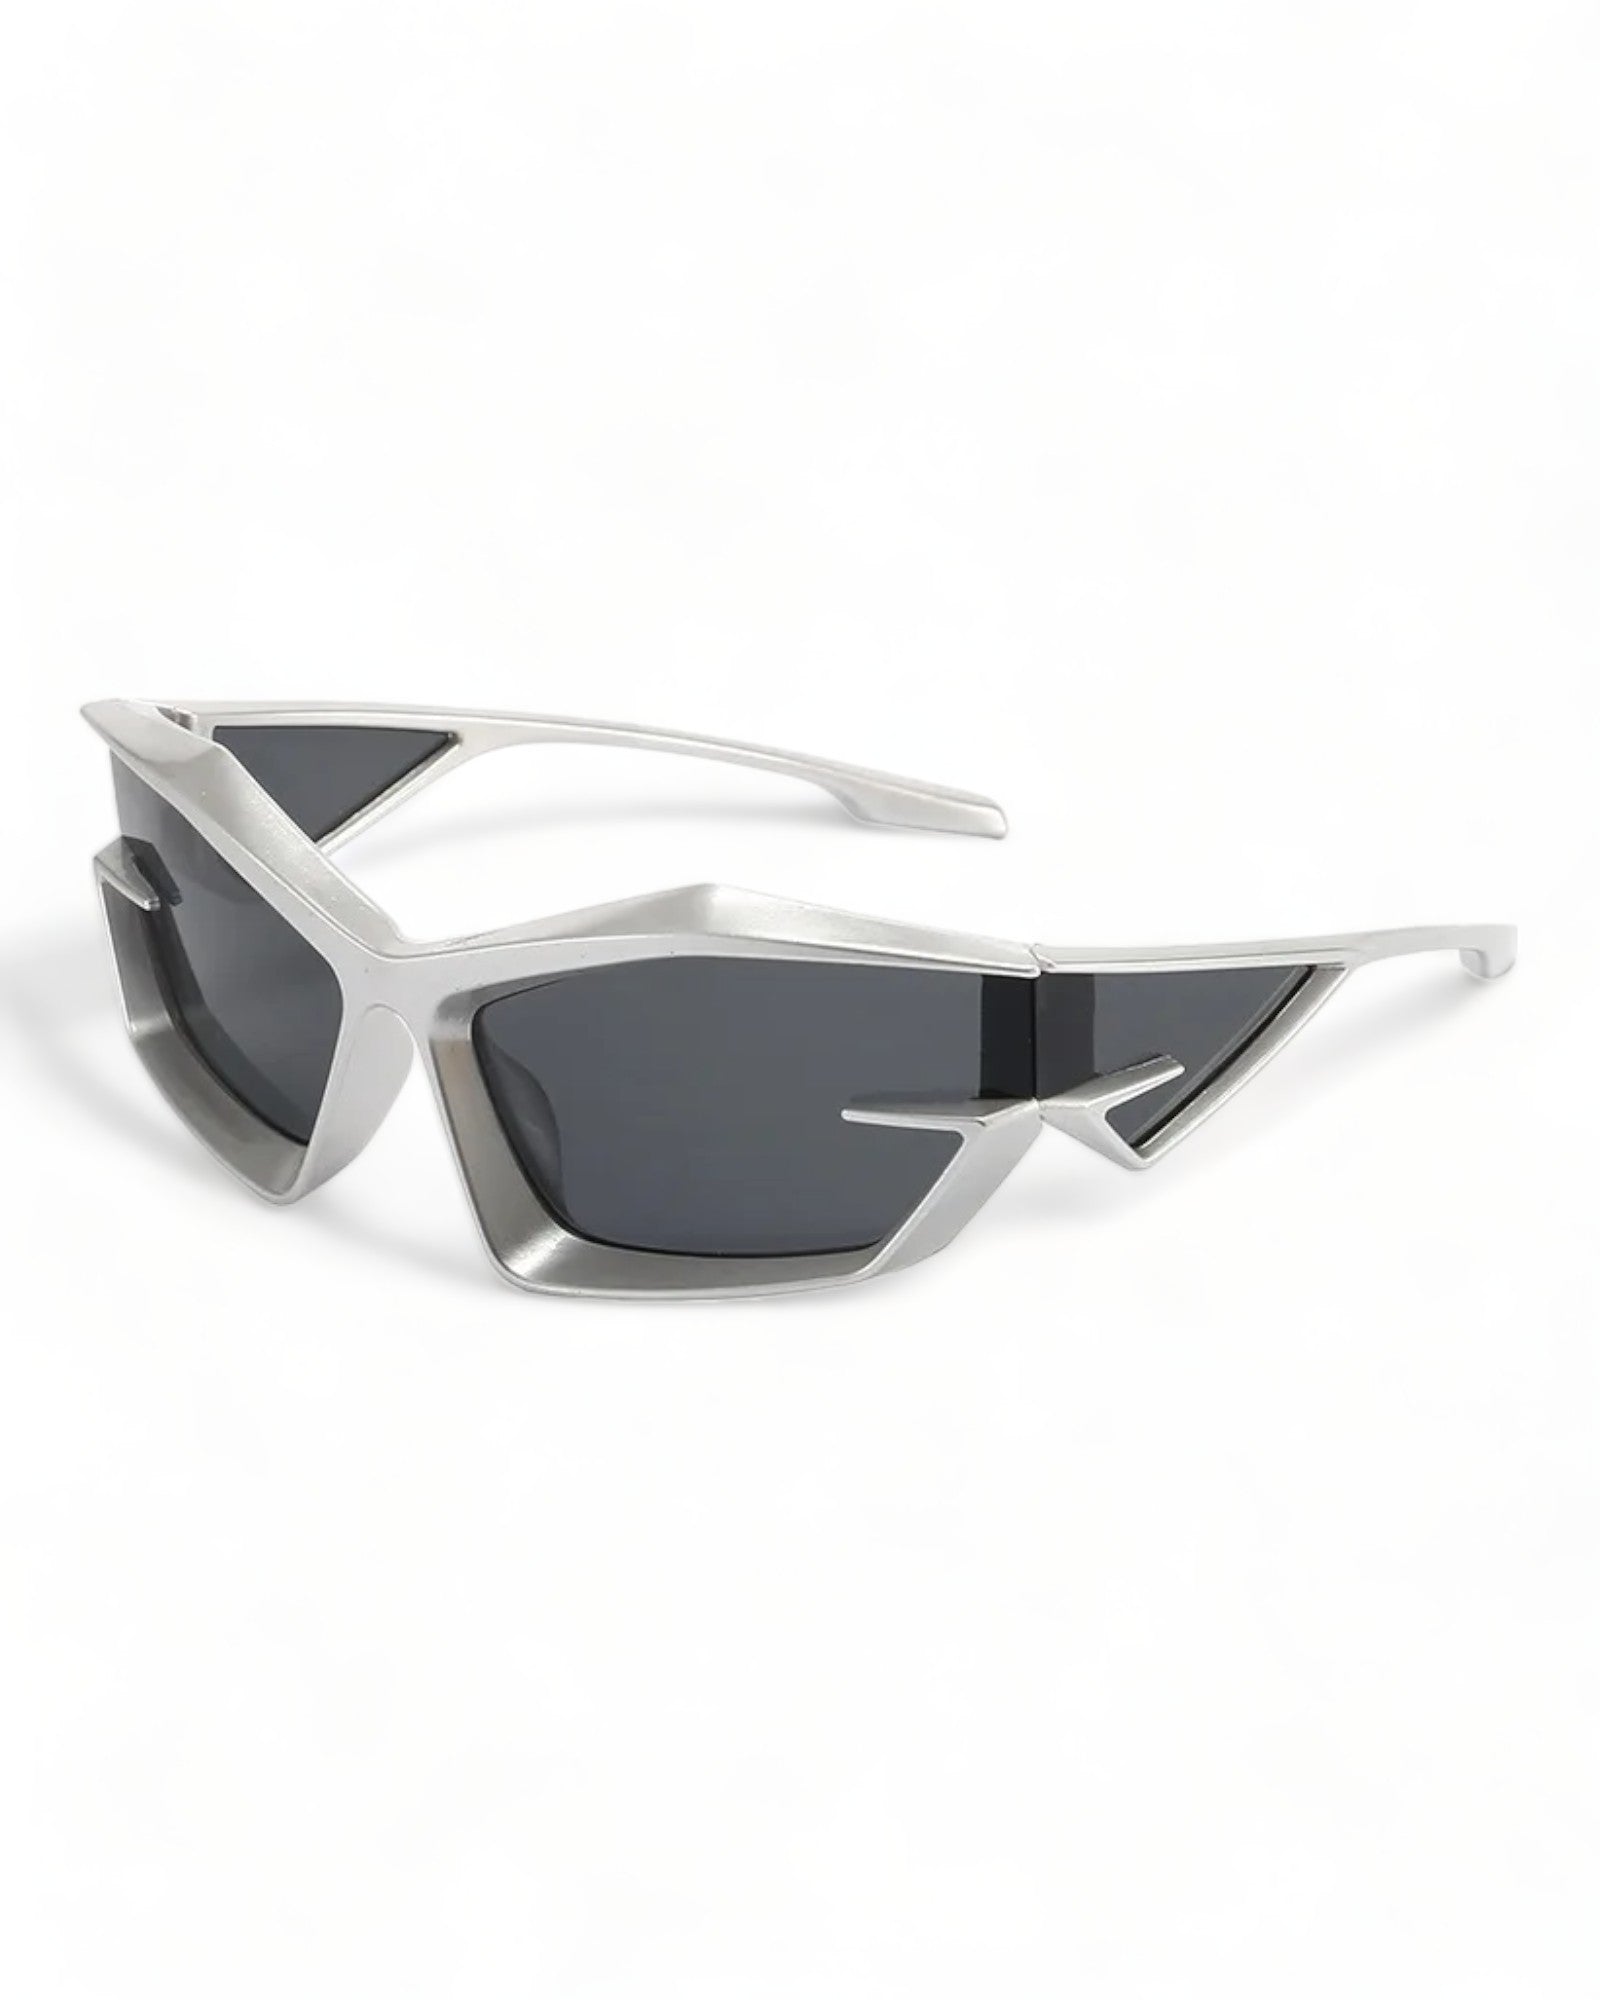 Helsinki Sunglasses Silver Gray